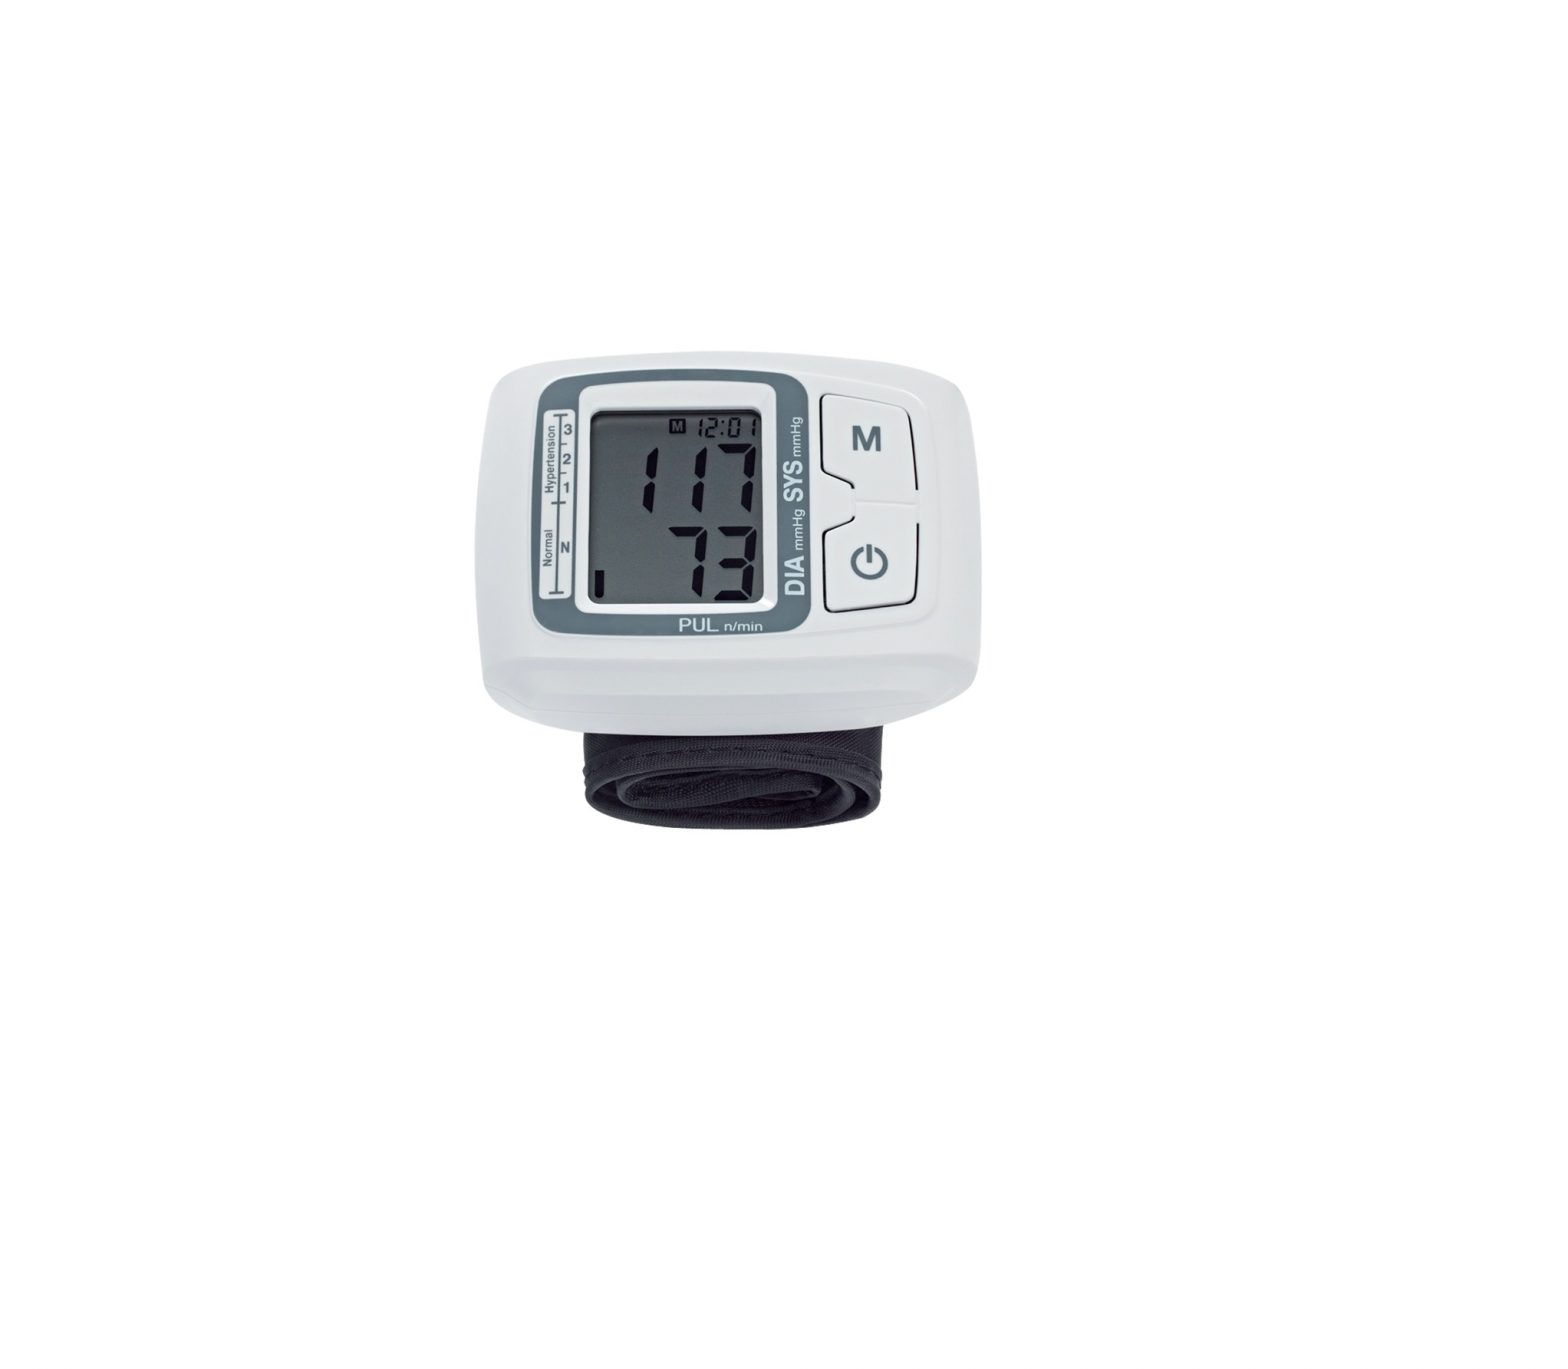 GIMA Smart Automatic Blood Pressure Monitor User Guide